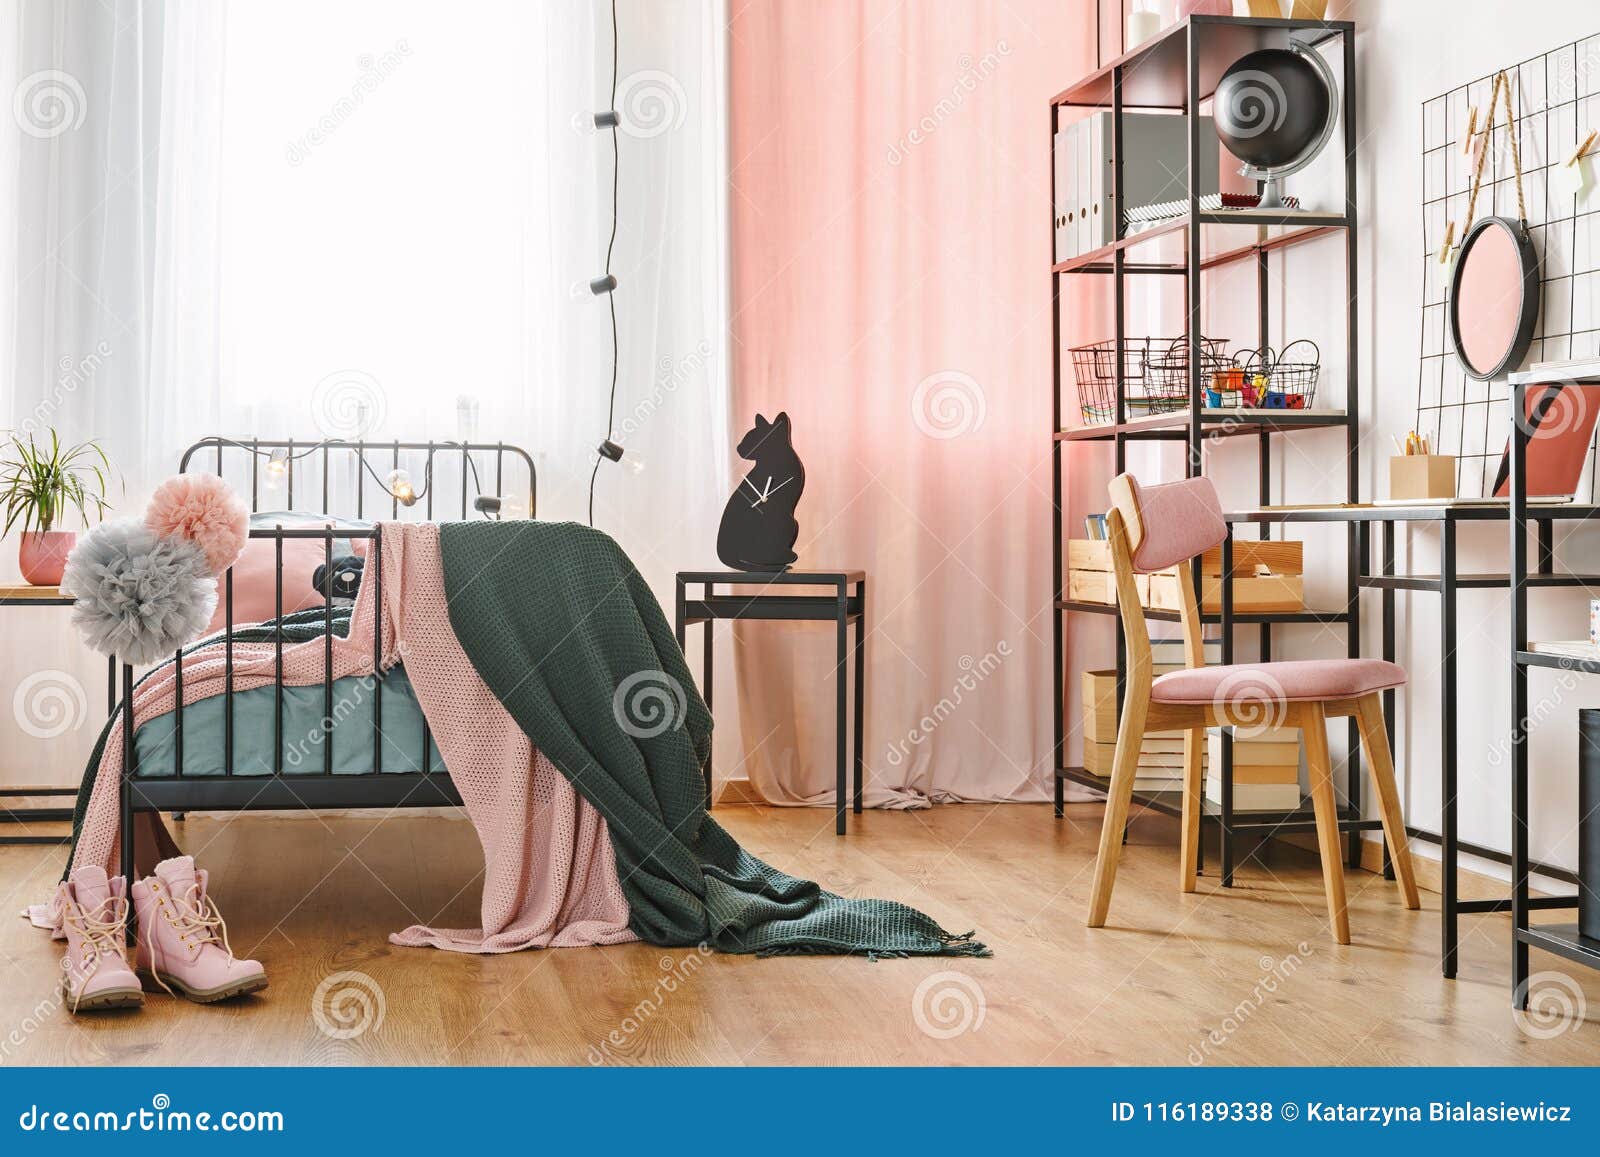 Industrial Black Furniture In Bedroom Stock Photo Image Of